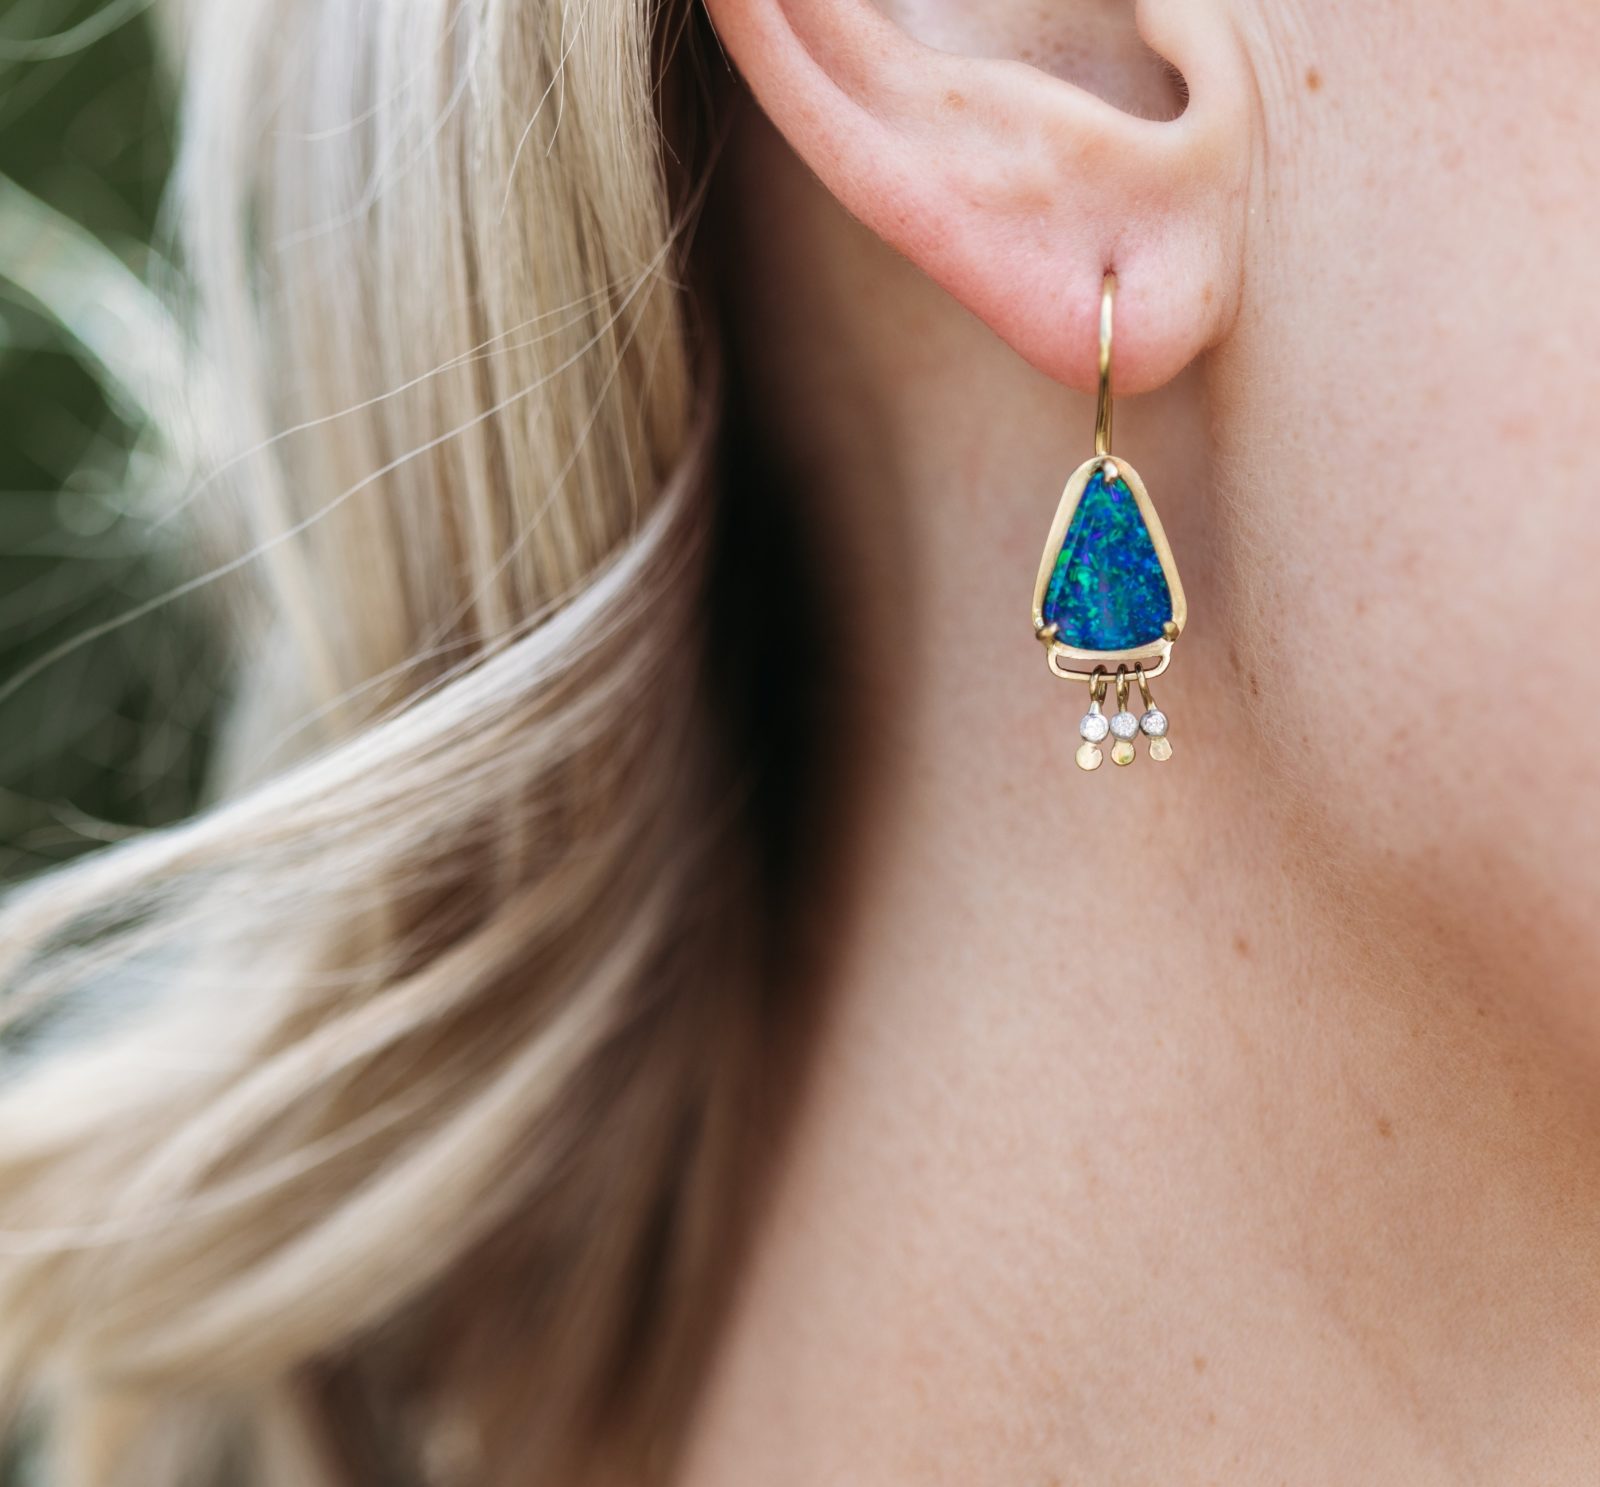 Triangular Opal Earrings with Diamond drops